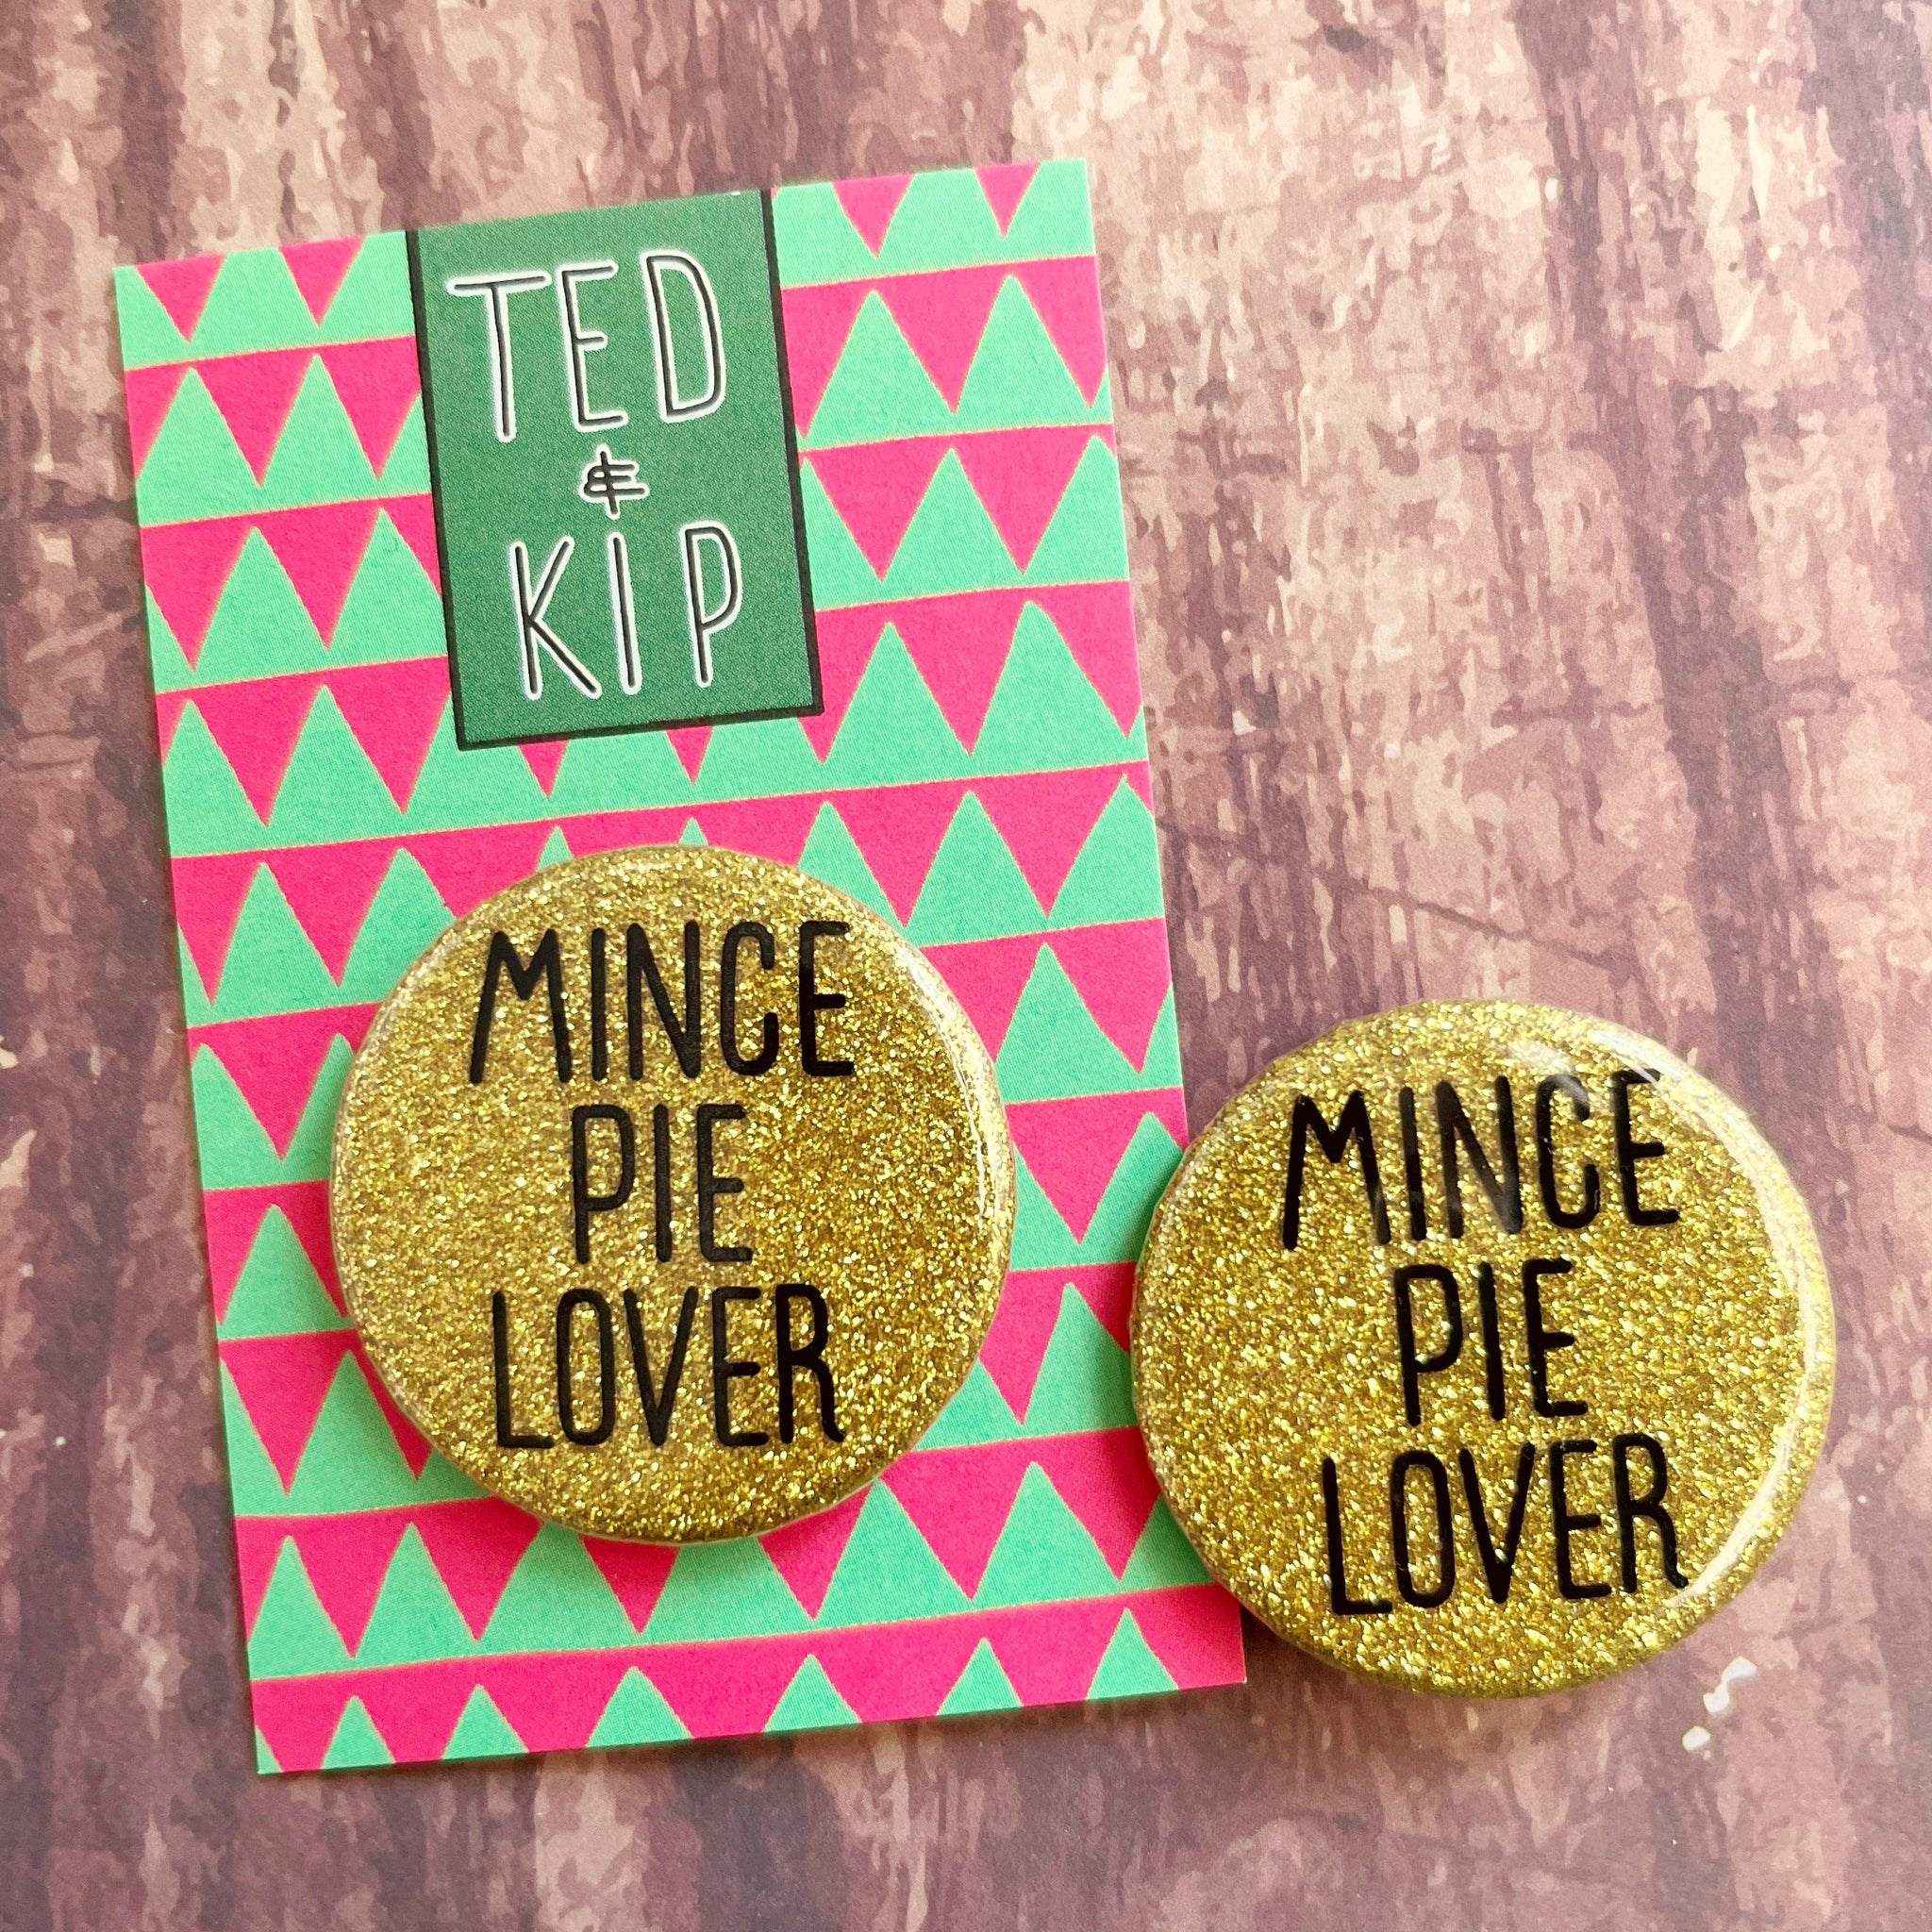 Mince Pie Lover Gold Glitter Button Badge